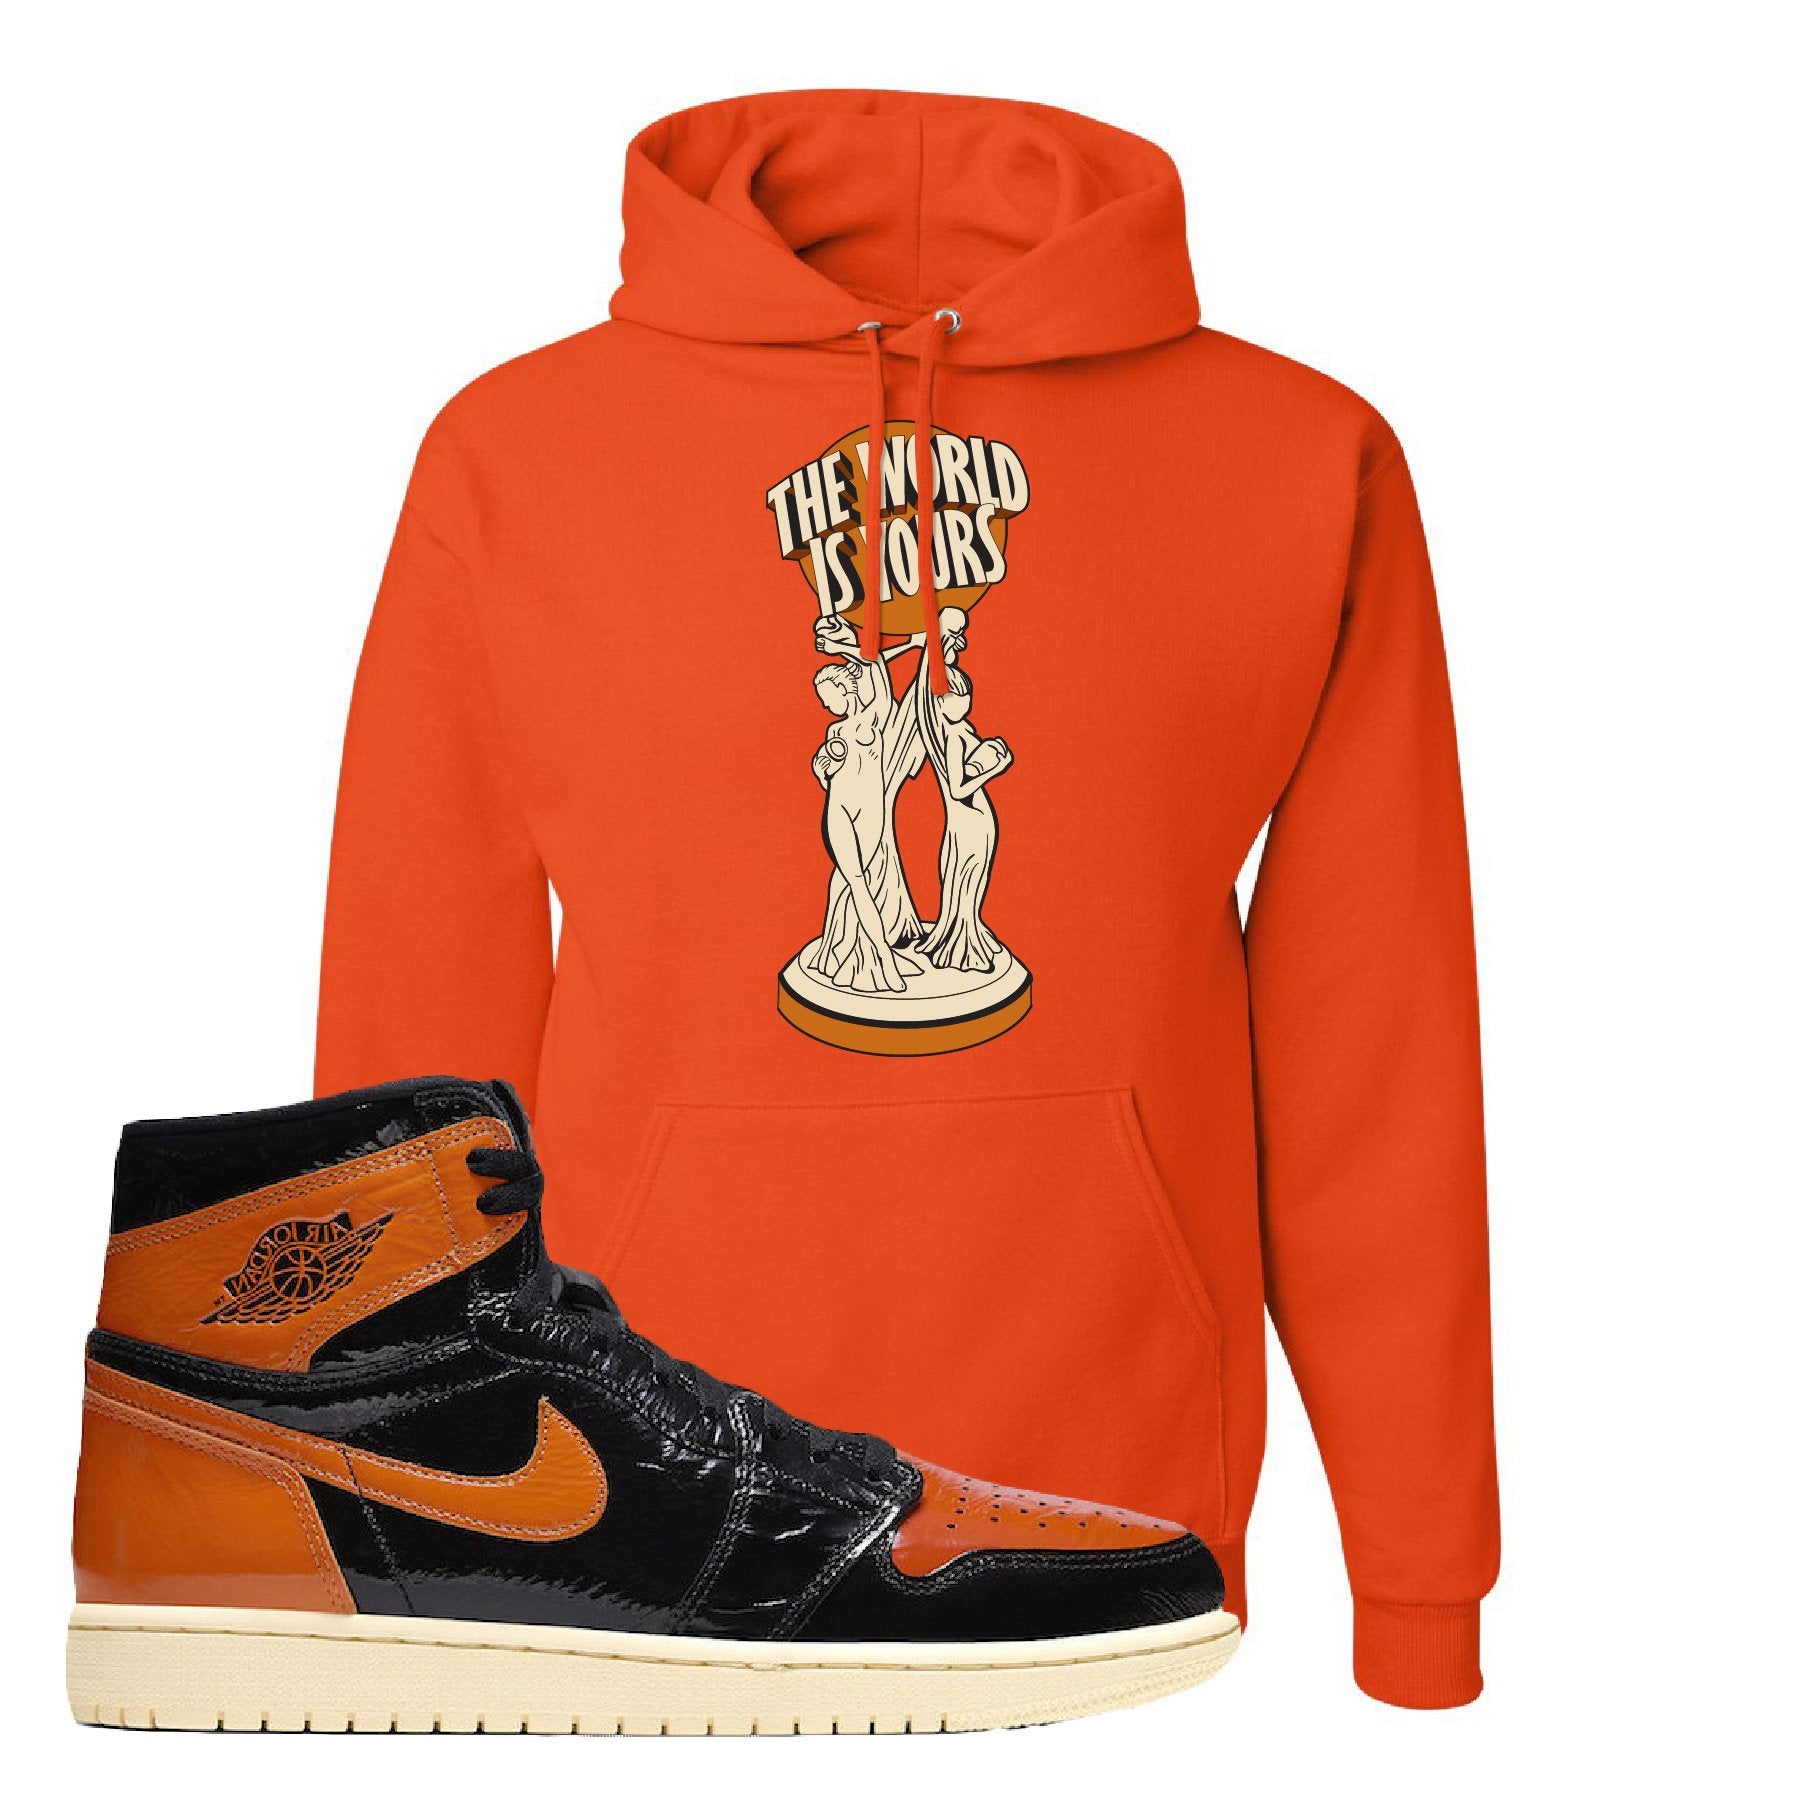 Jordan 1 Shattered Backboard The World Is Your Statue Burnt Orange Sneaker Hook Up Pullover Hoodie